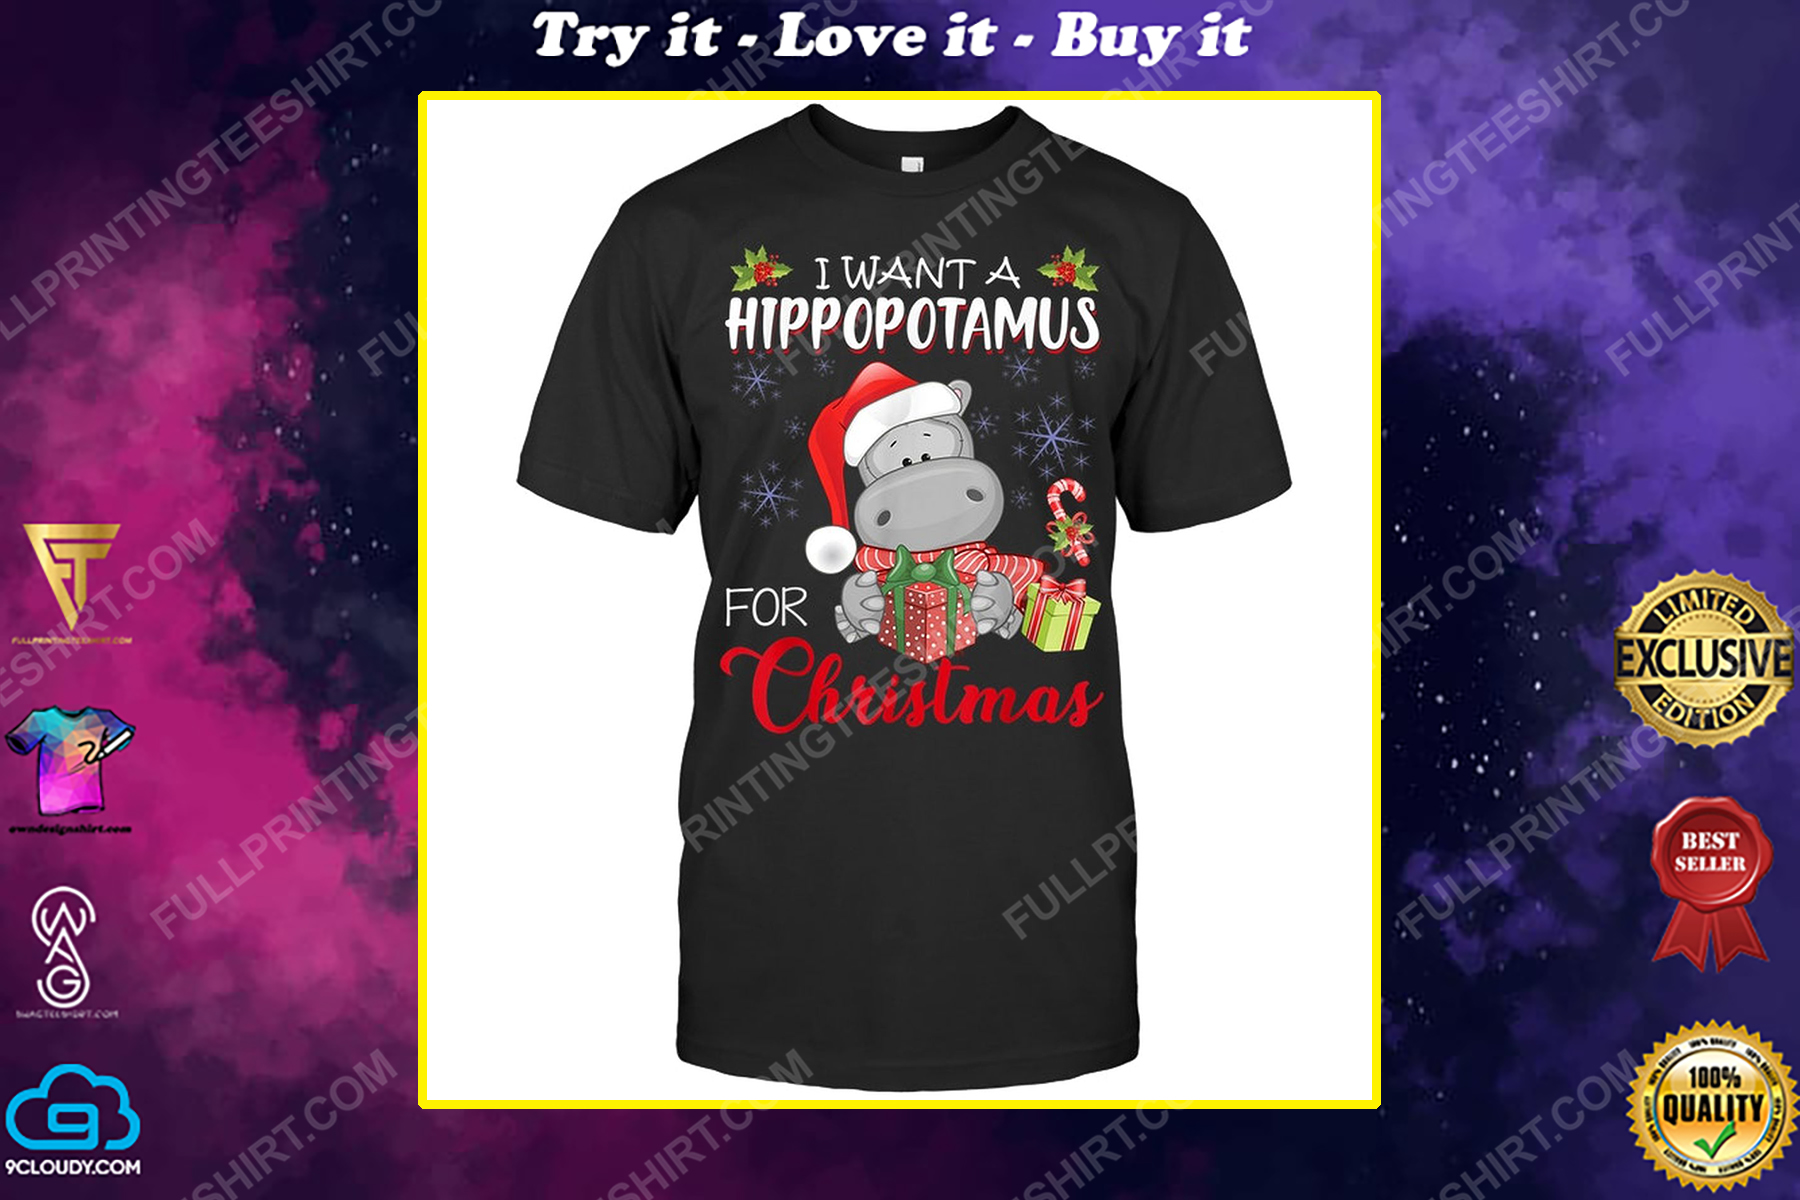 I want a hippopotamus for christmas shirt